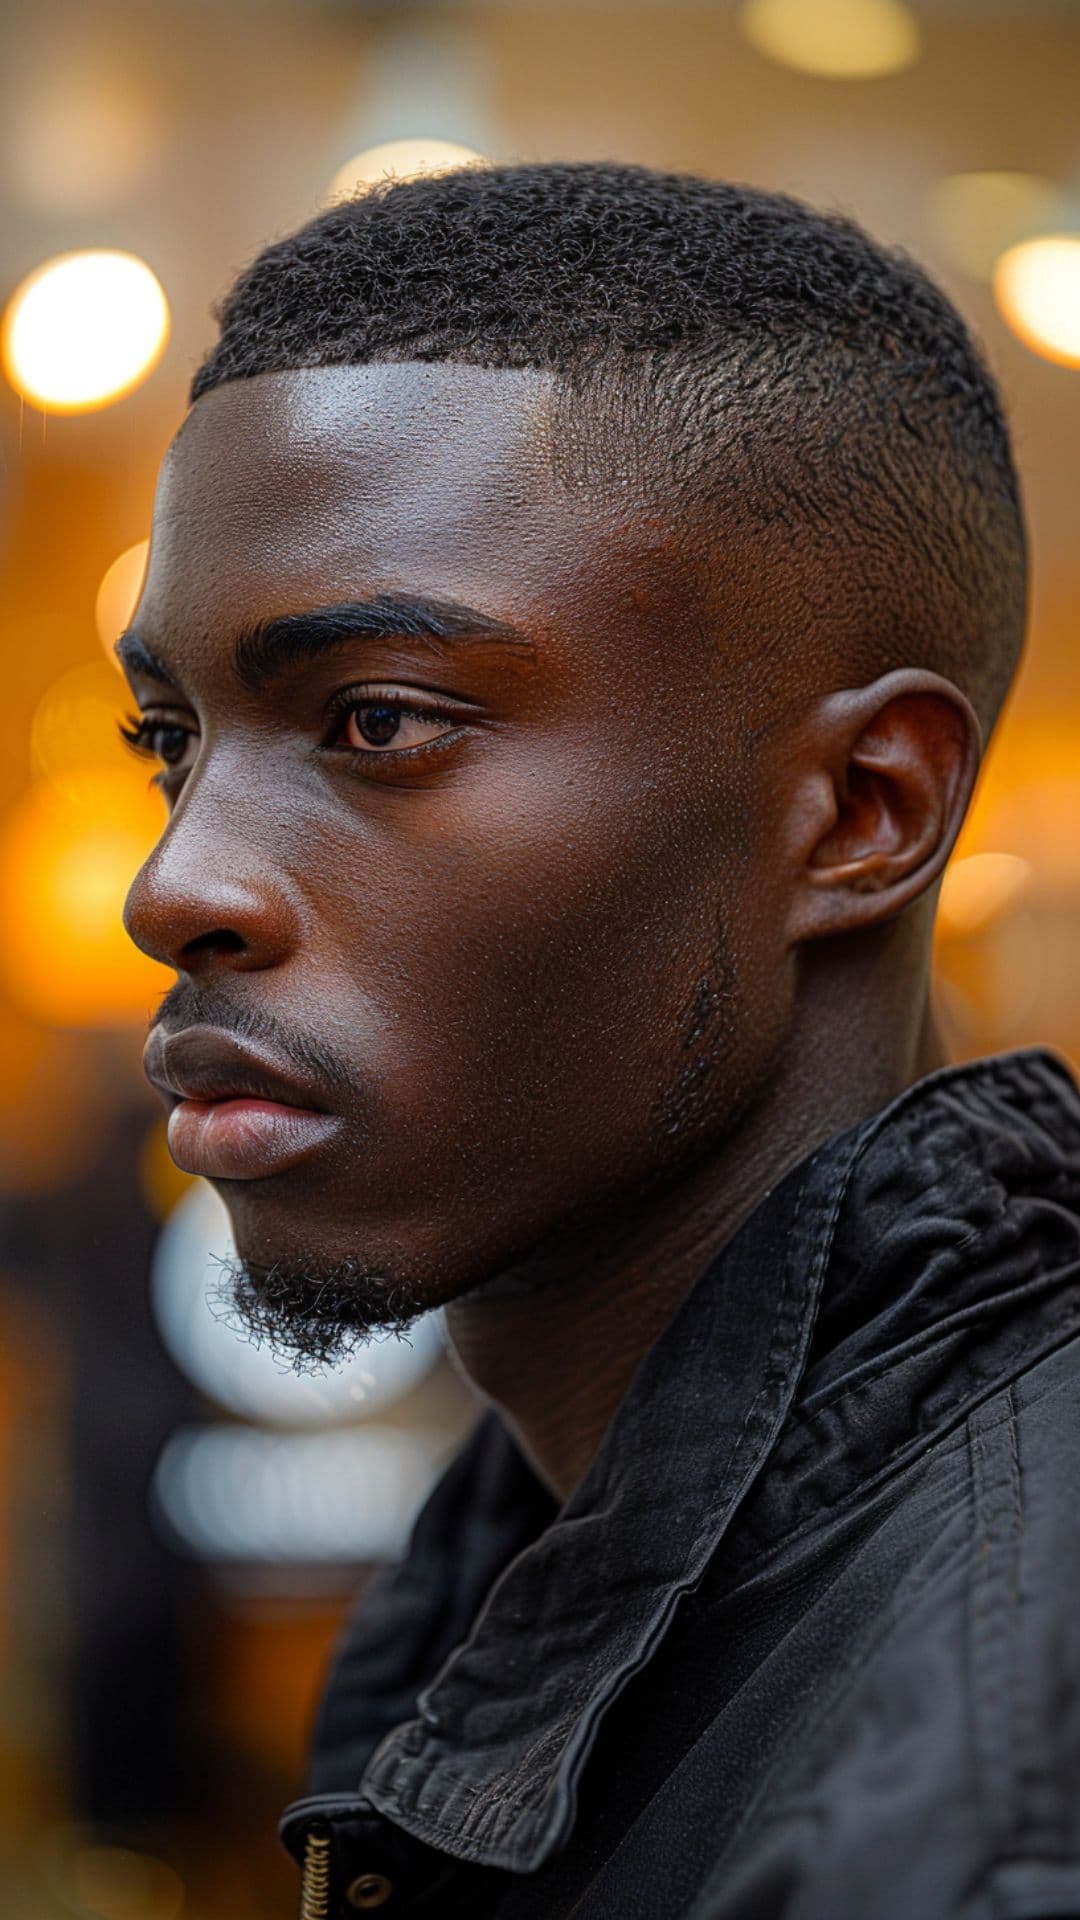 A black man modelling a buzz cut.